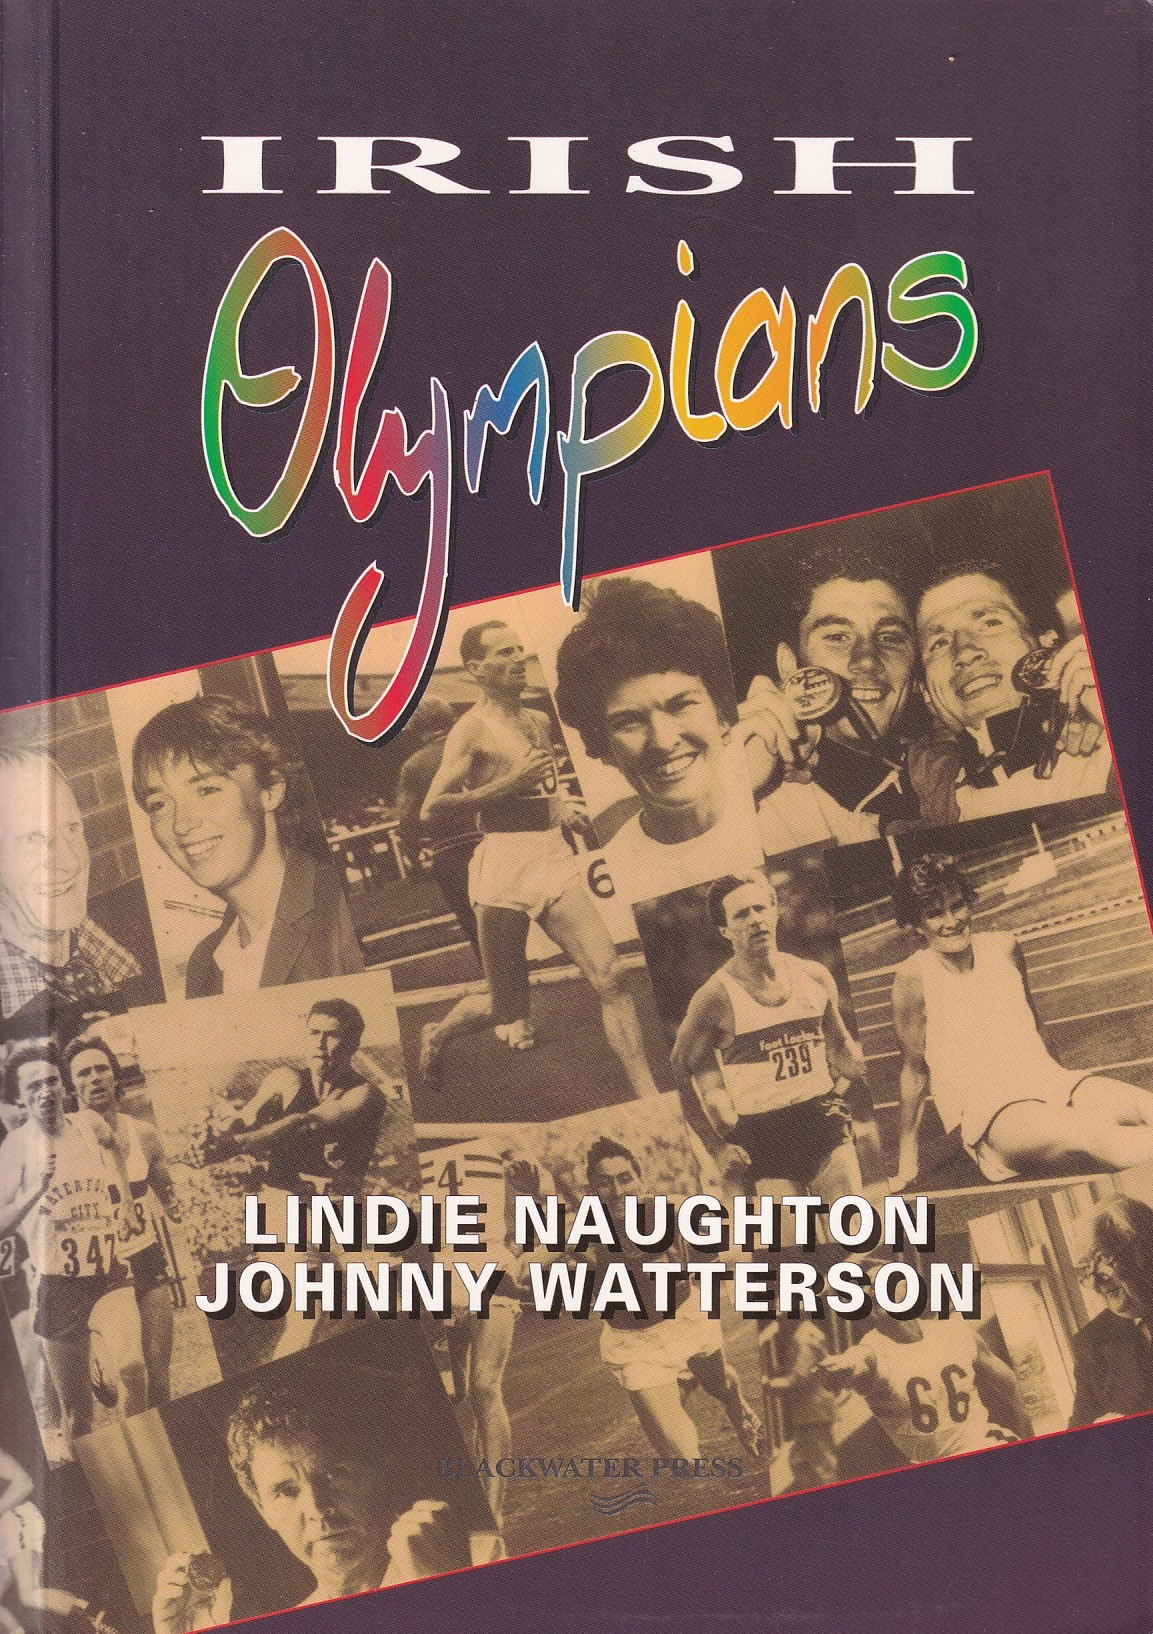 Irish Olympians | Lindie Naughton & Johnny Watterson | Charlie Byrne's